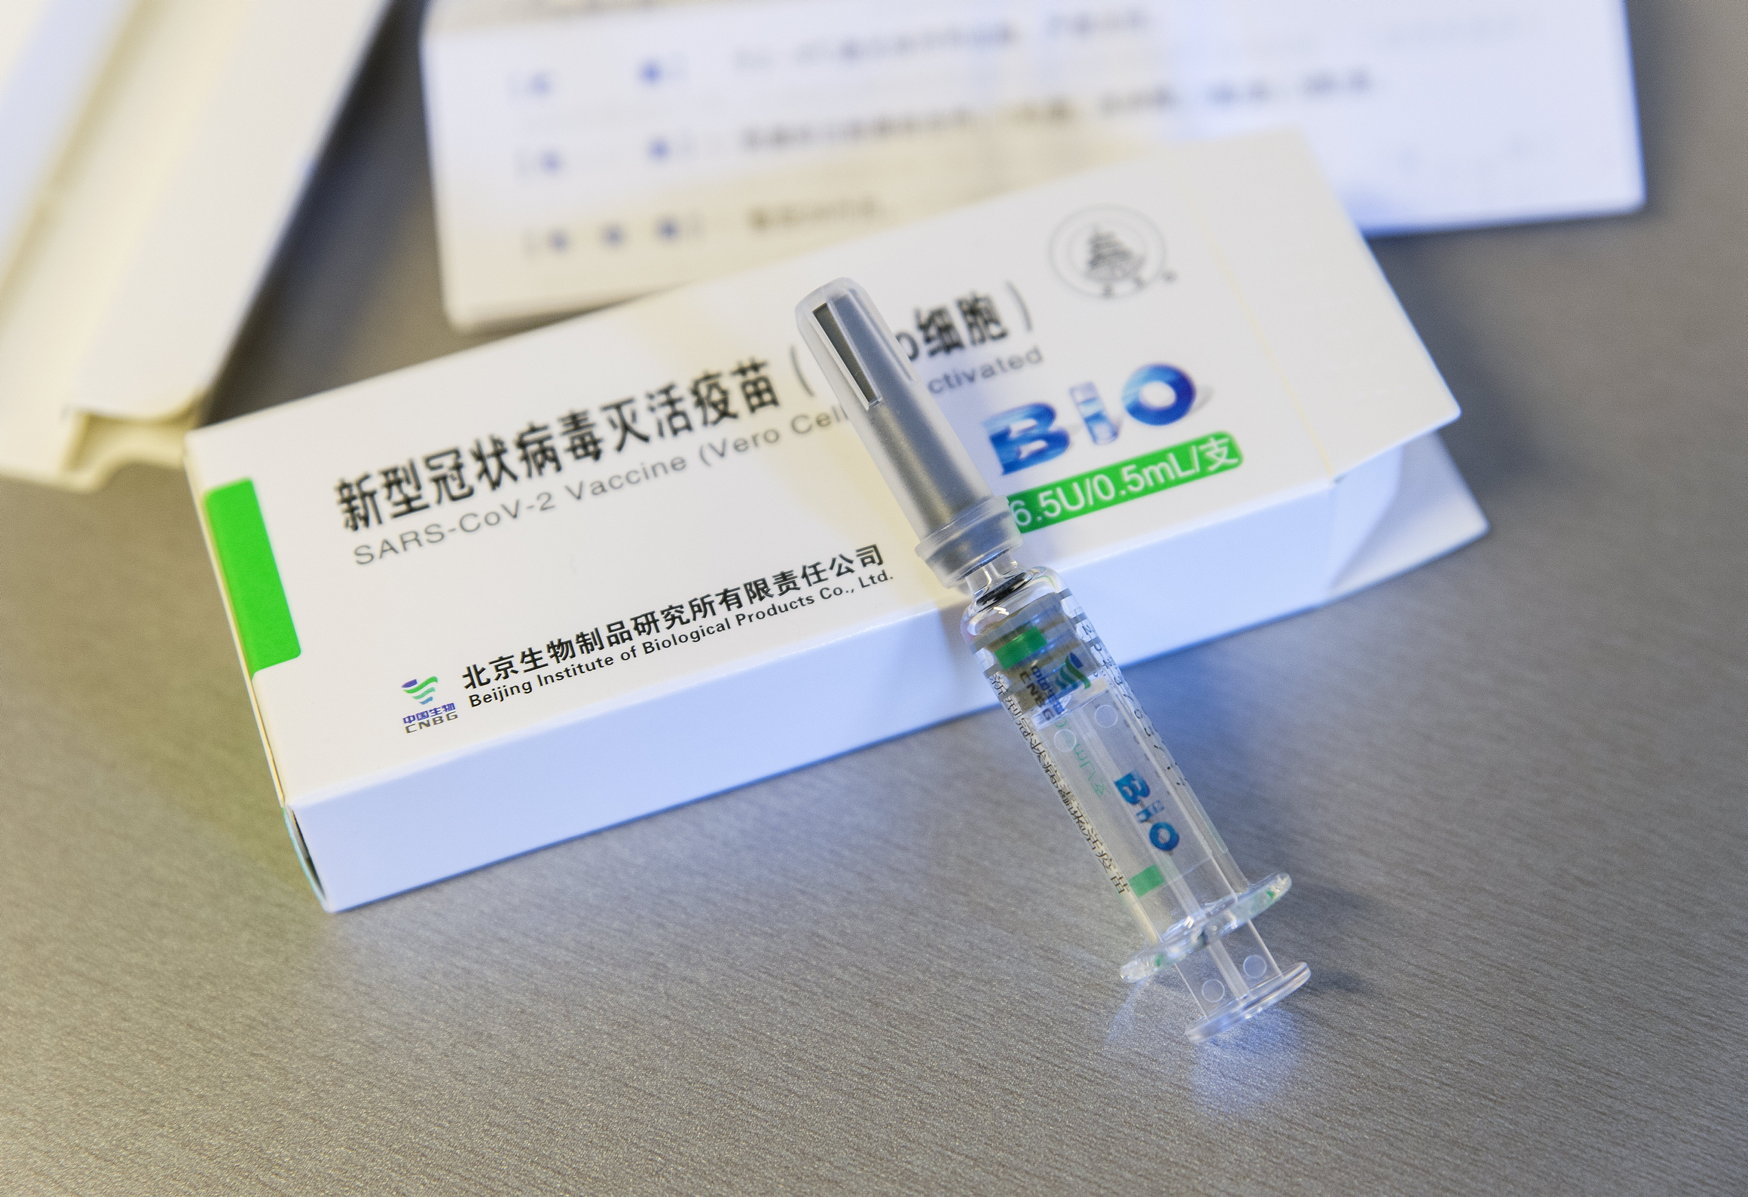 Worries Around Sinopharm Resurface Following Low Antibody Tests